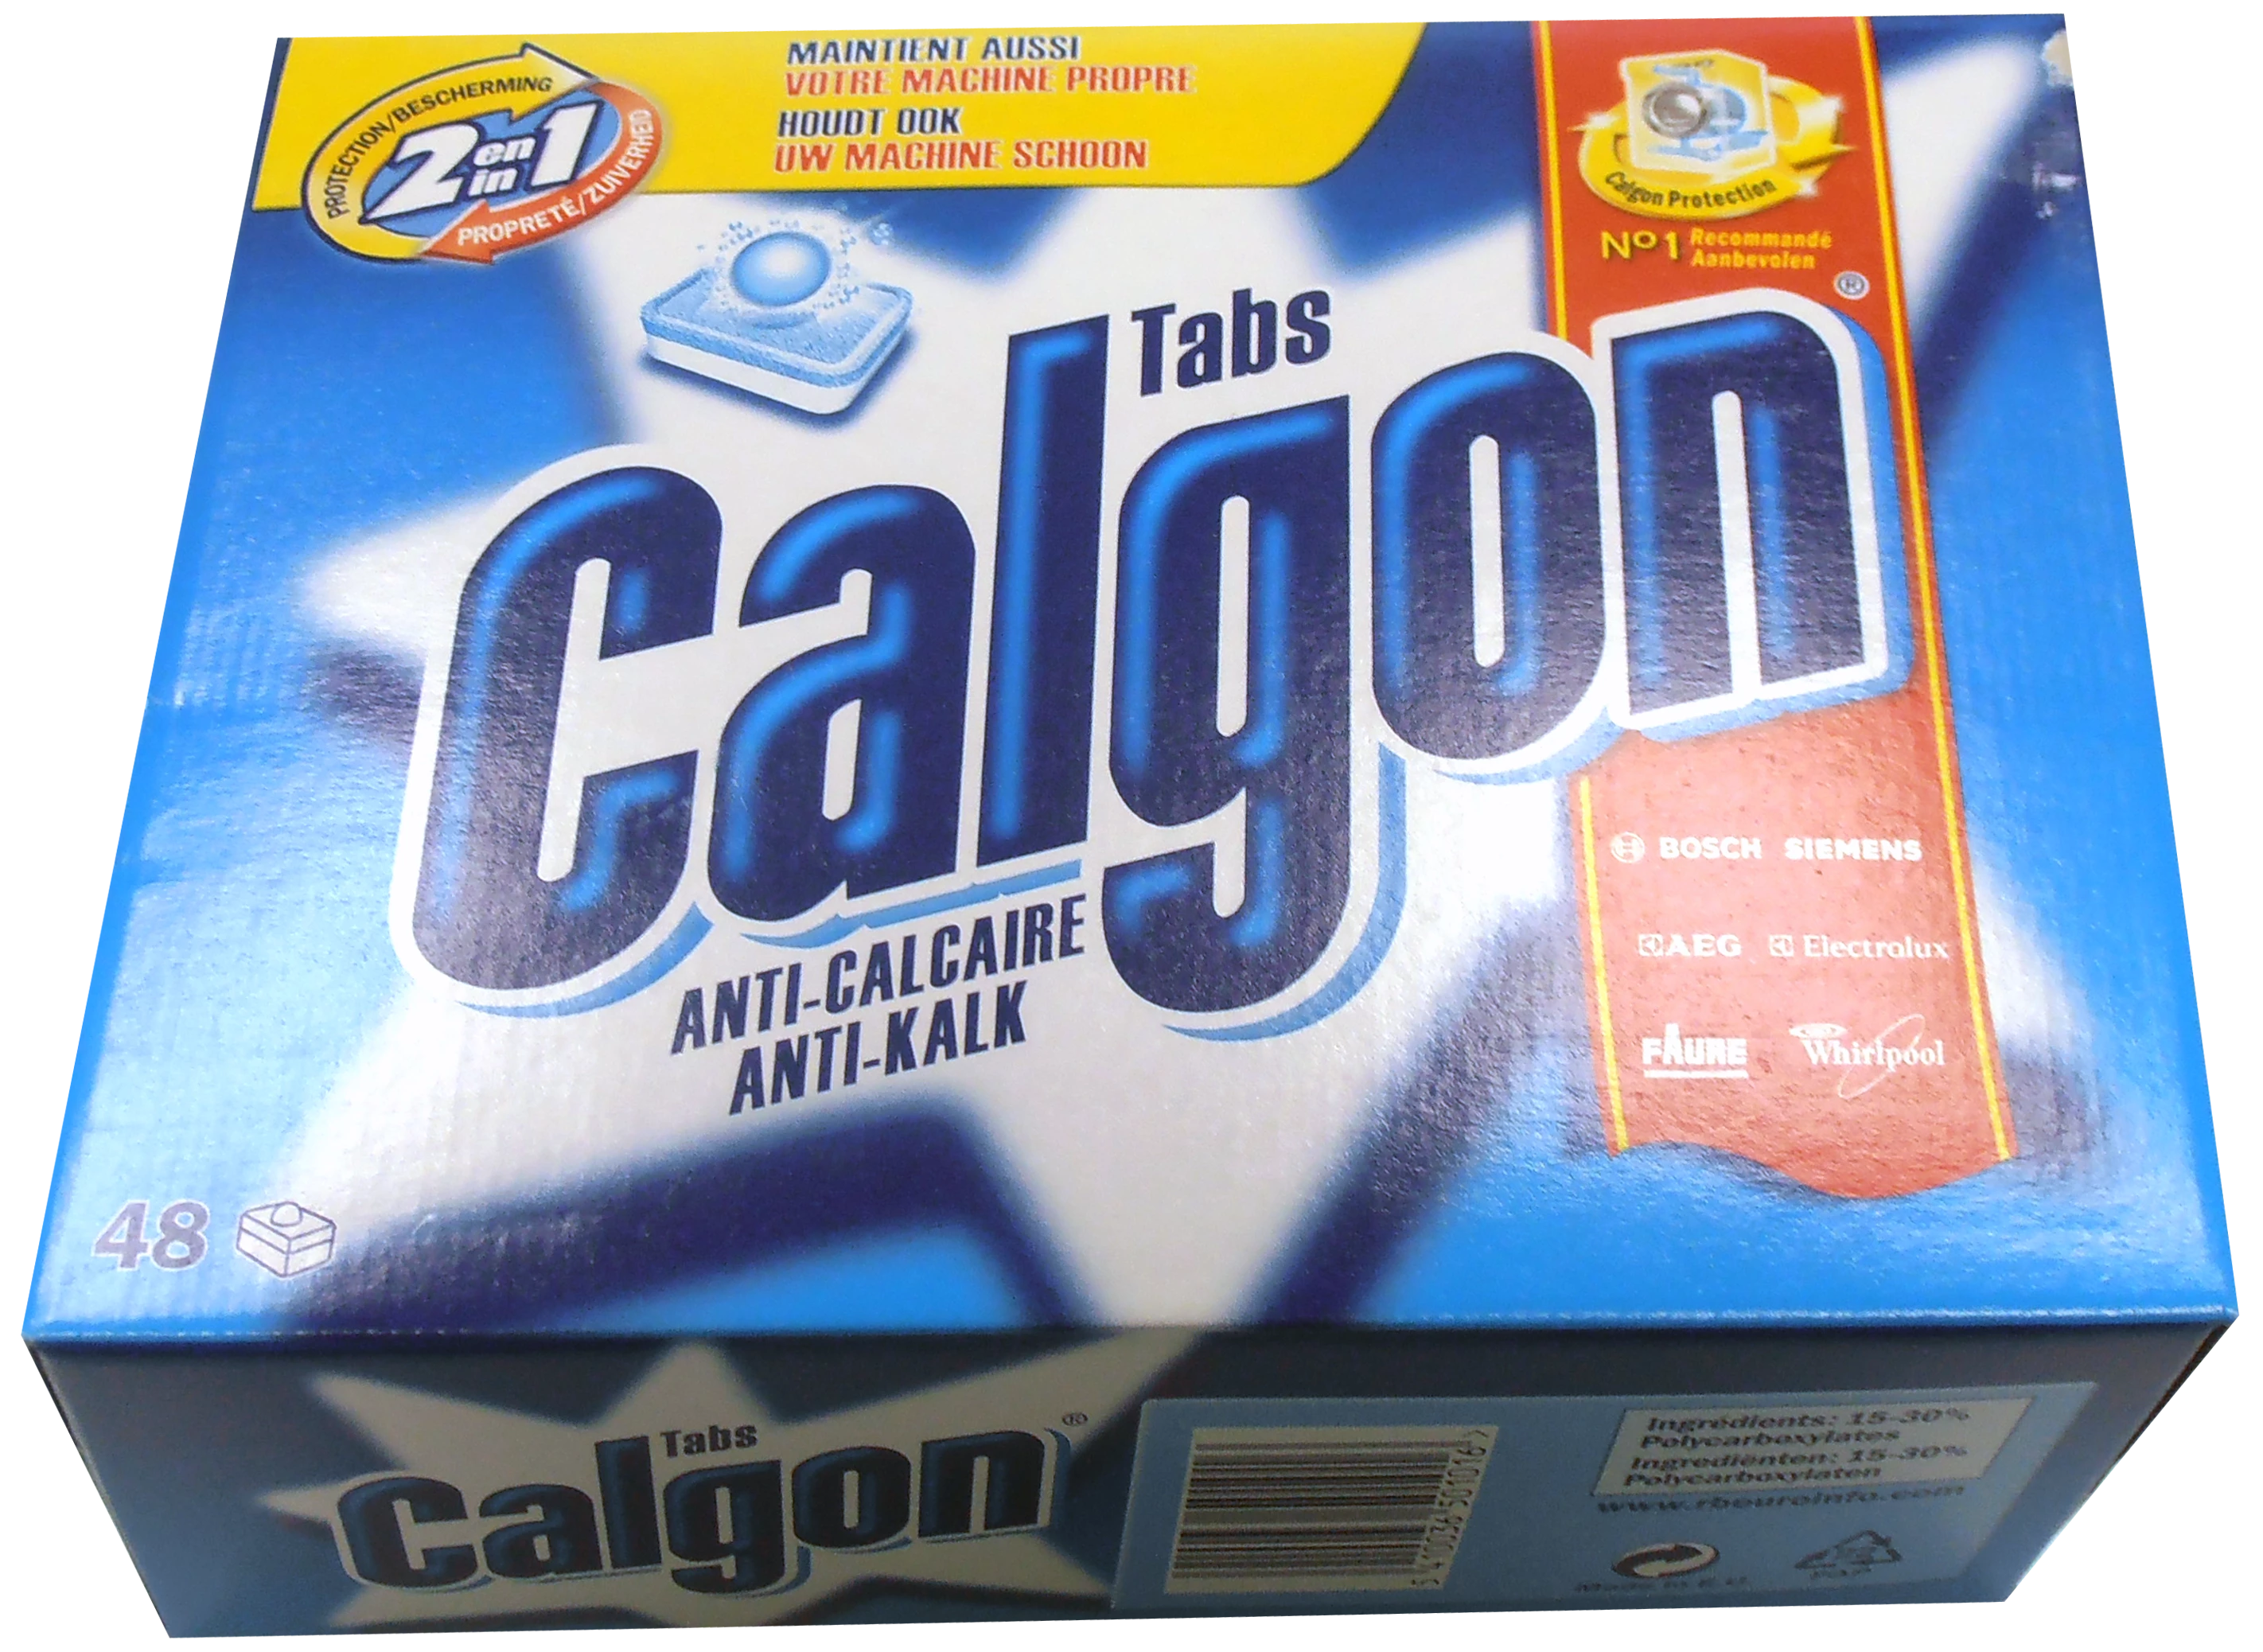 Calgon X48 Tabs 2en1 720g